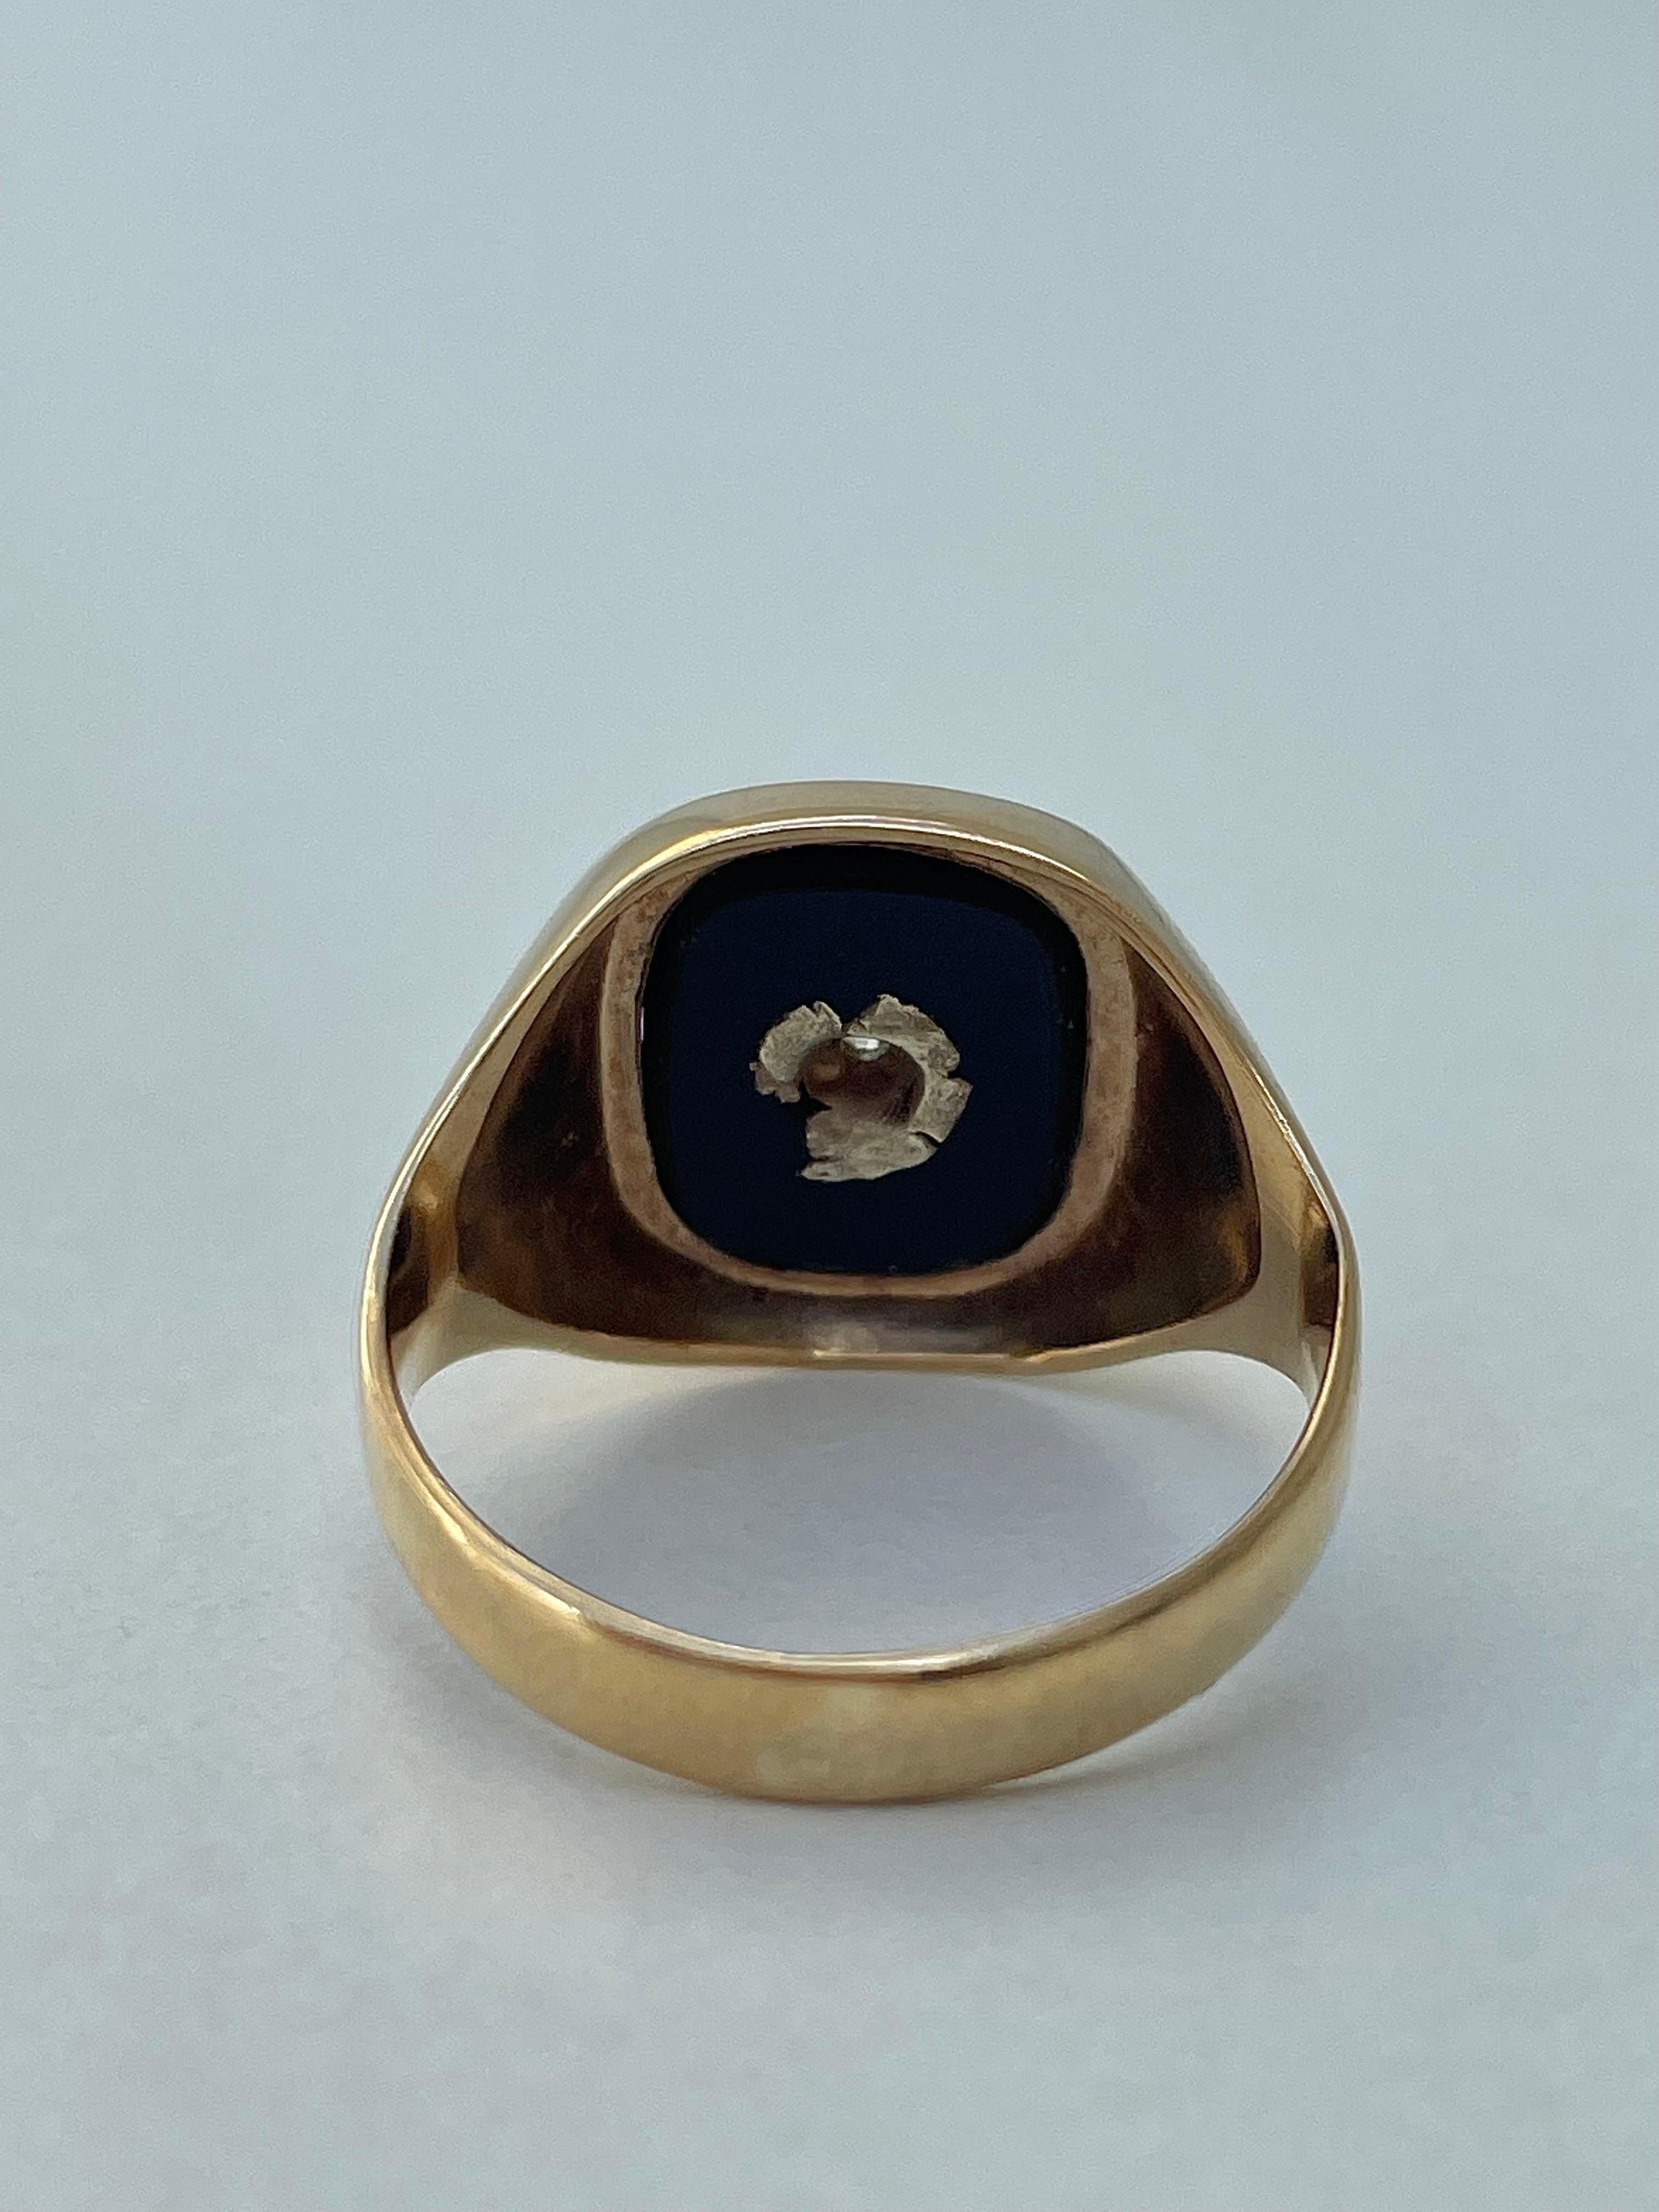 9ct gold onyx ring